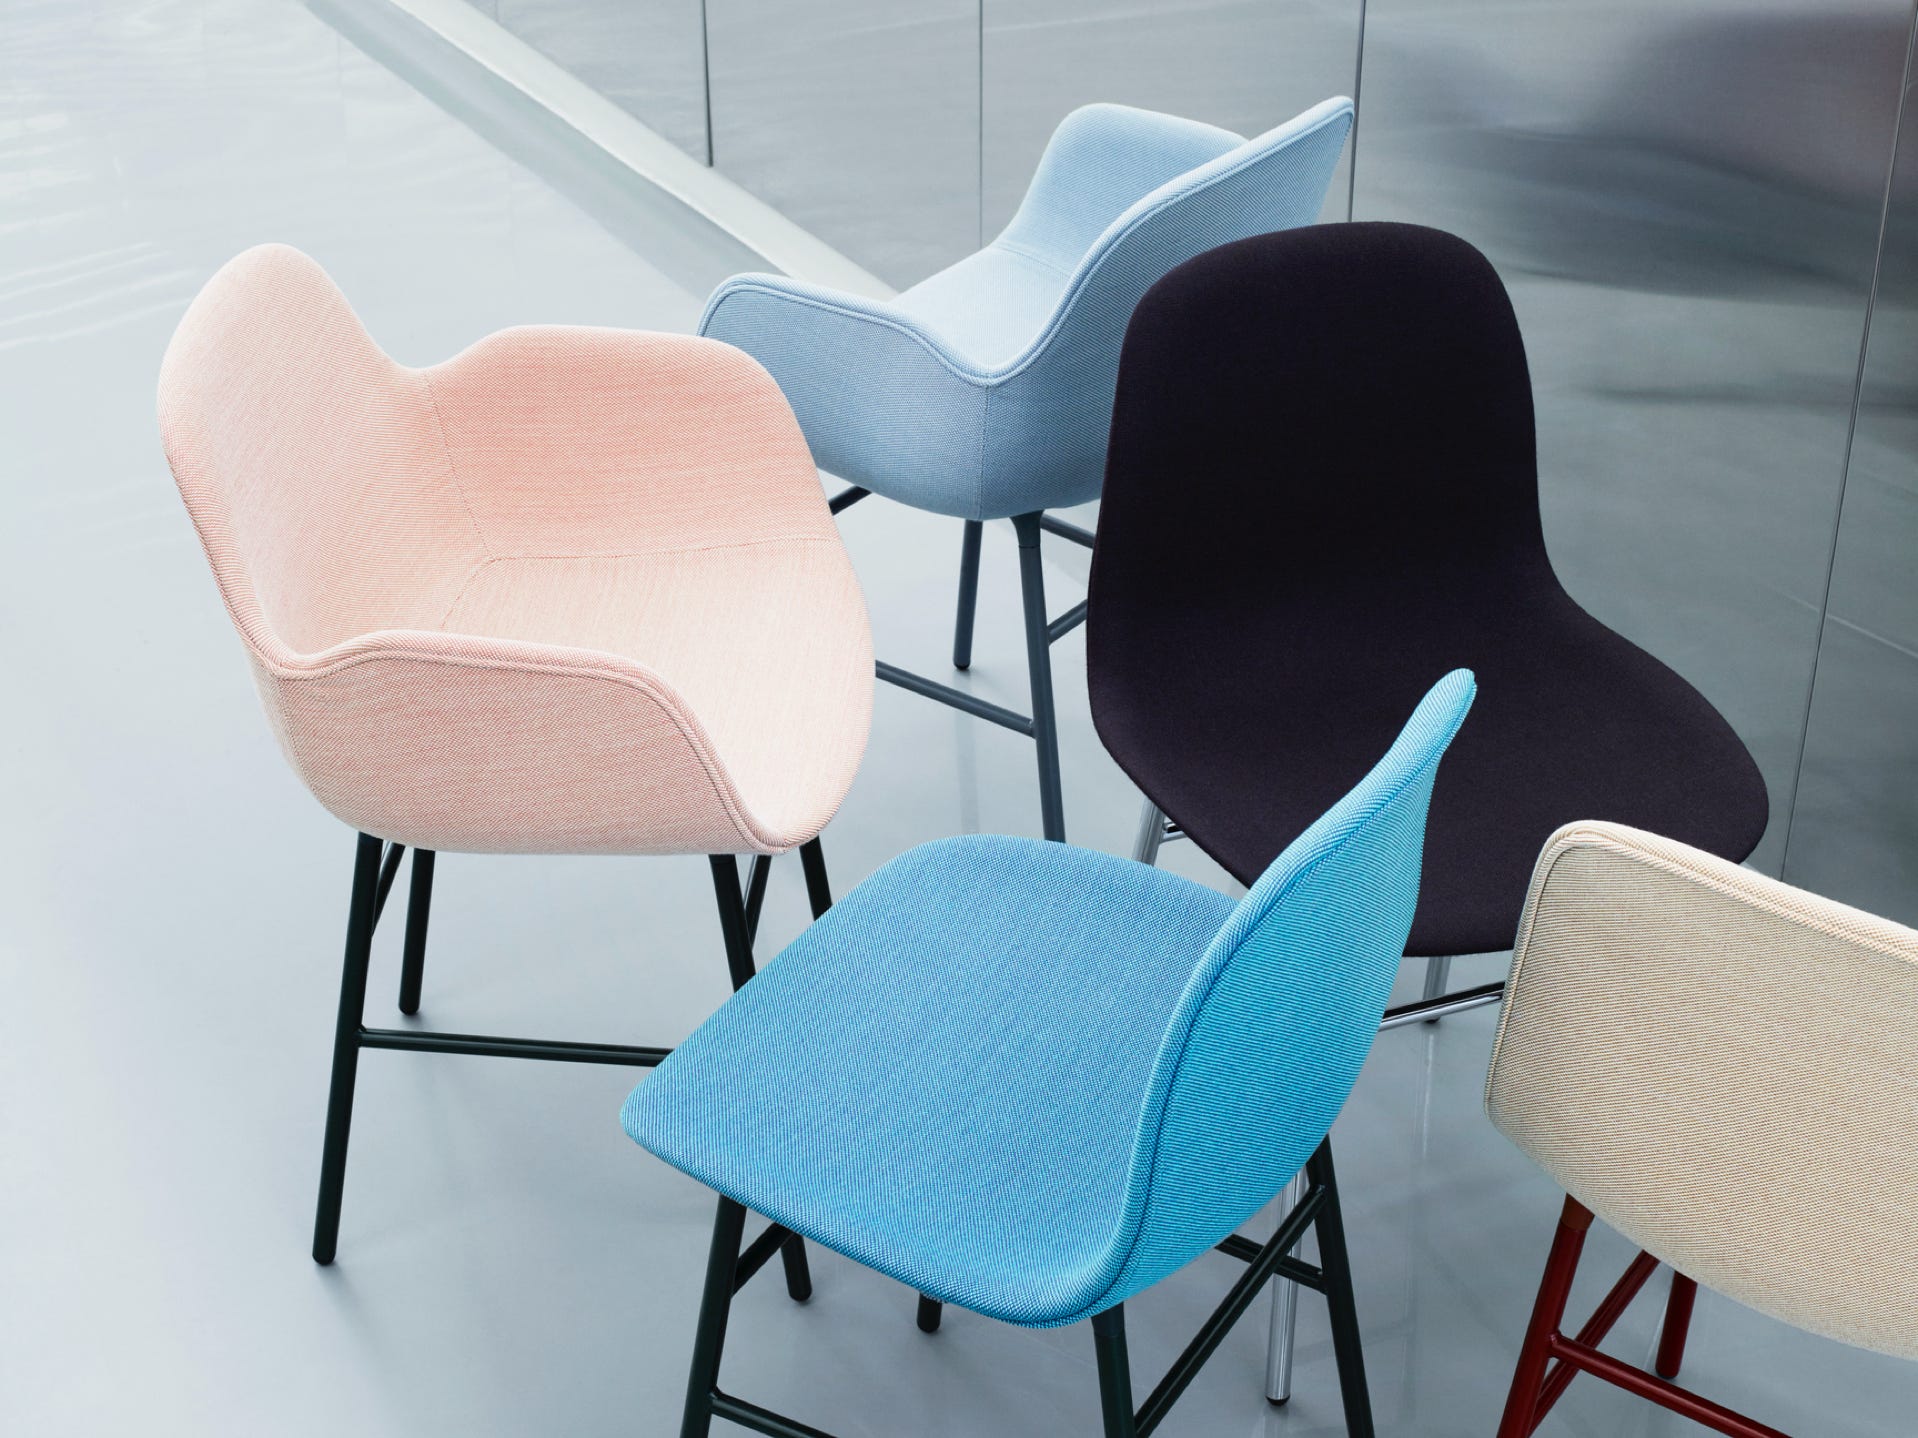 Normann Copenhagen – FORM Upholstered chair, metal legs – Simon Legald, 2015